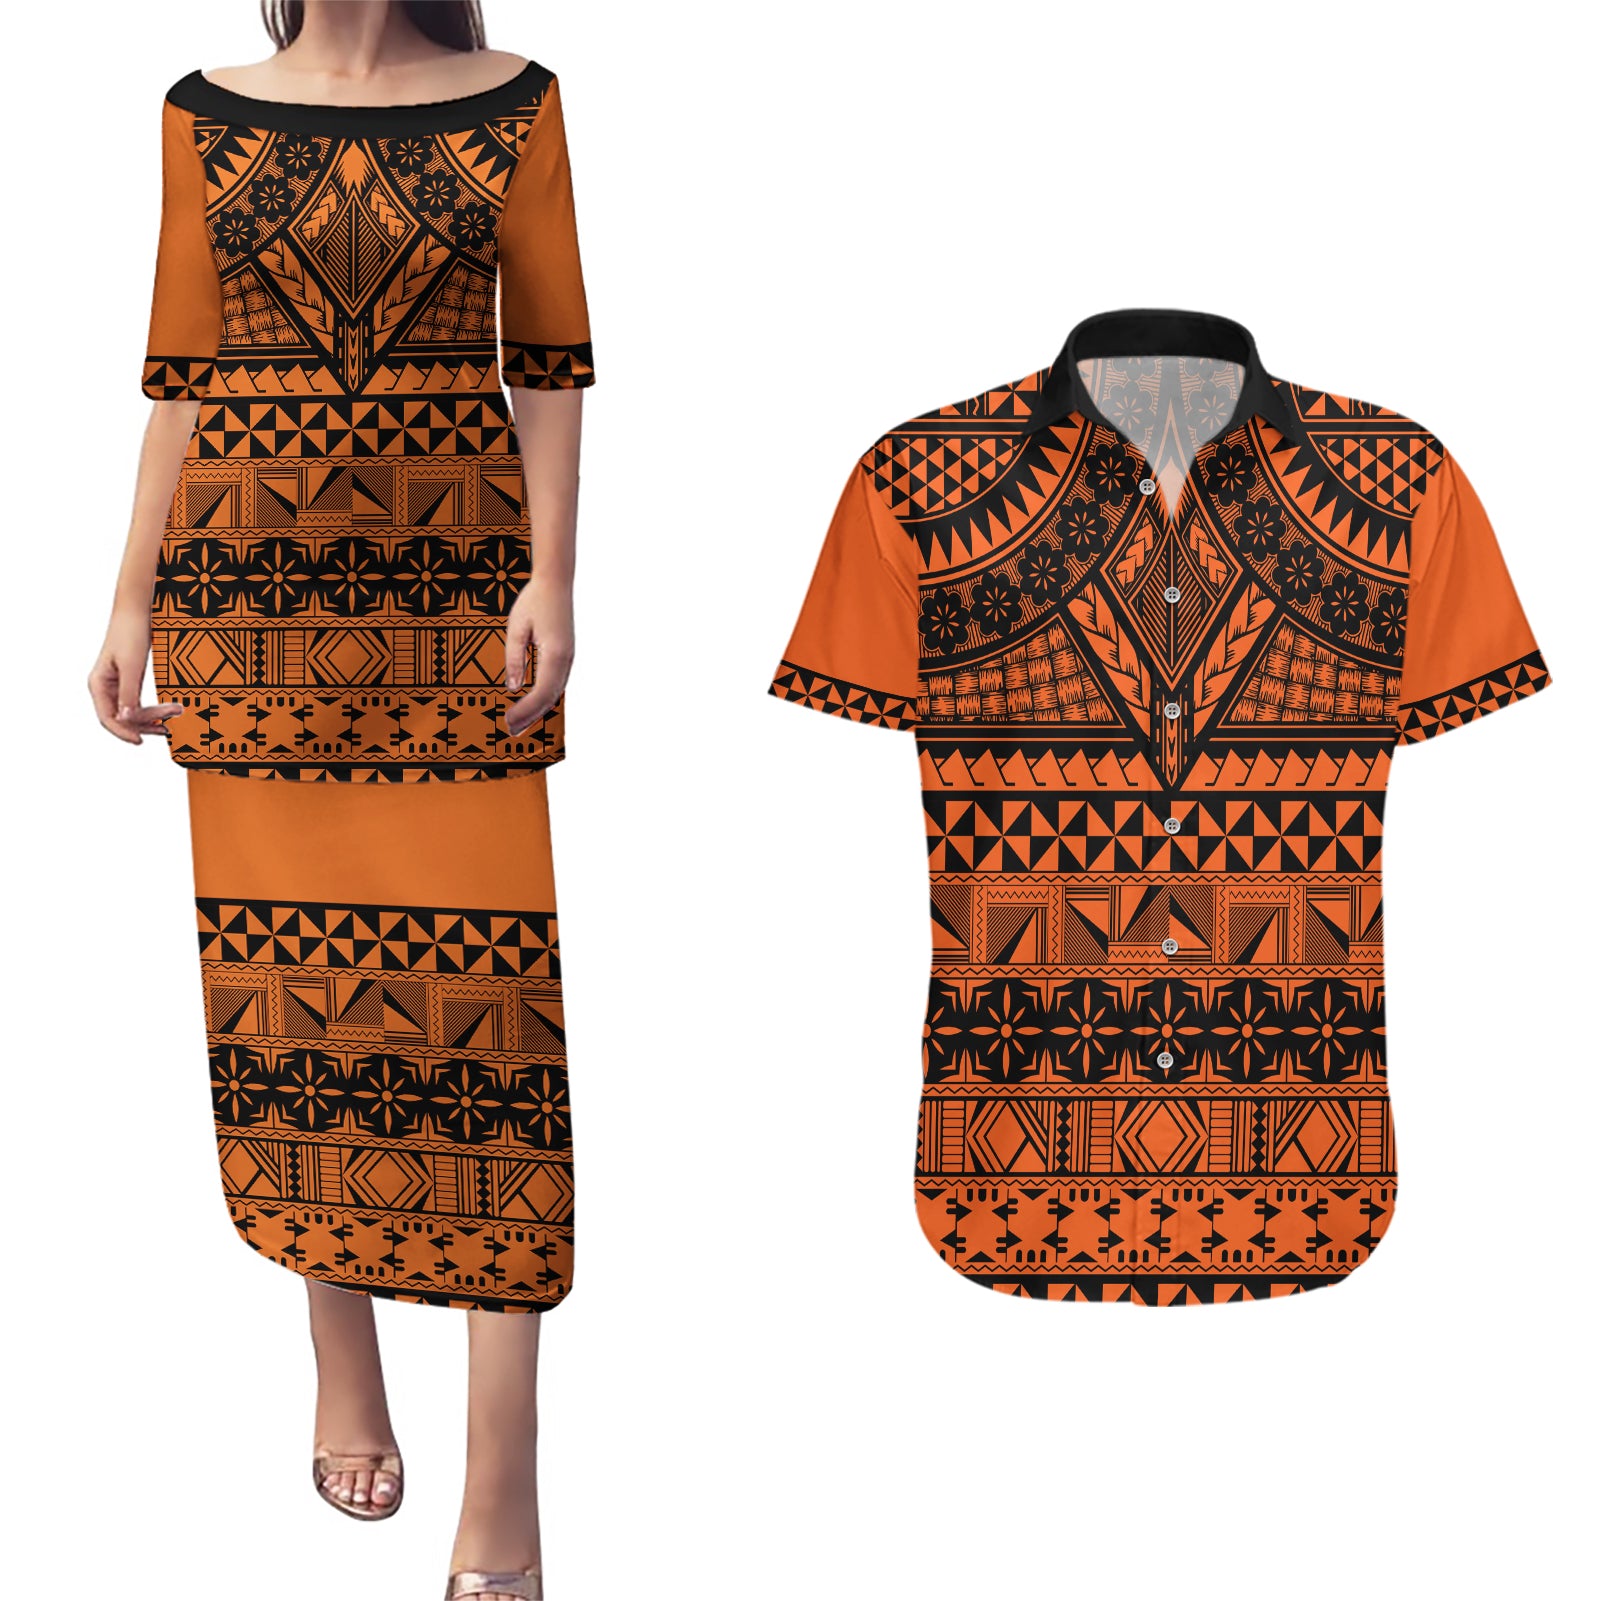 Halo Olaketa Solomon Islands Couples Matching Puletasi and Hawaiian Shirt Melanesian Tribal Pattern Orange Version LT14 Orange - Polynesian Pride